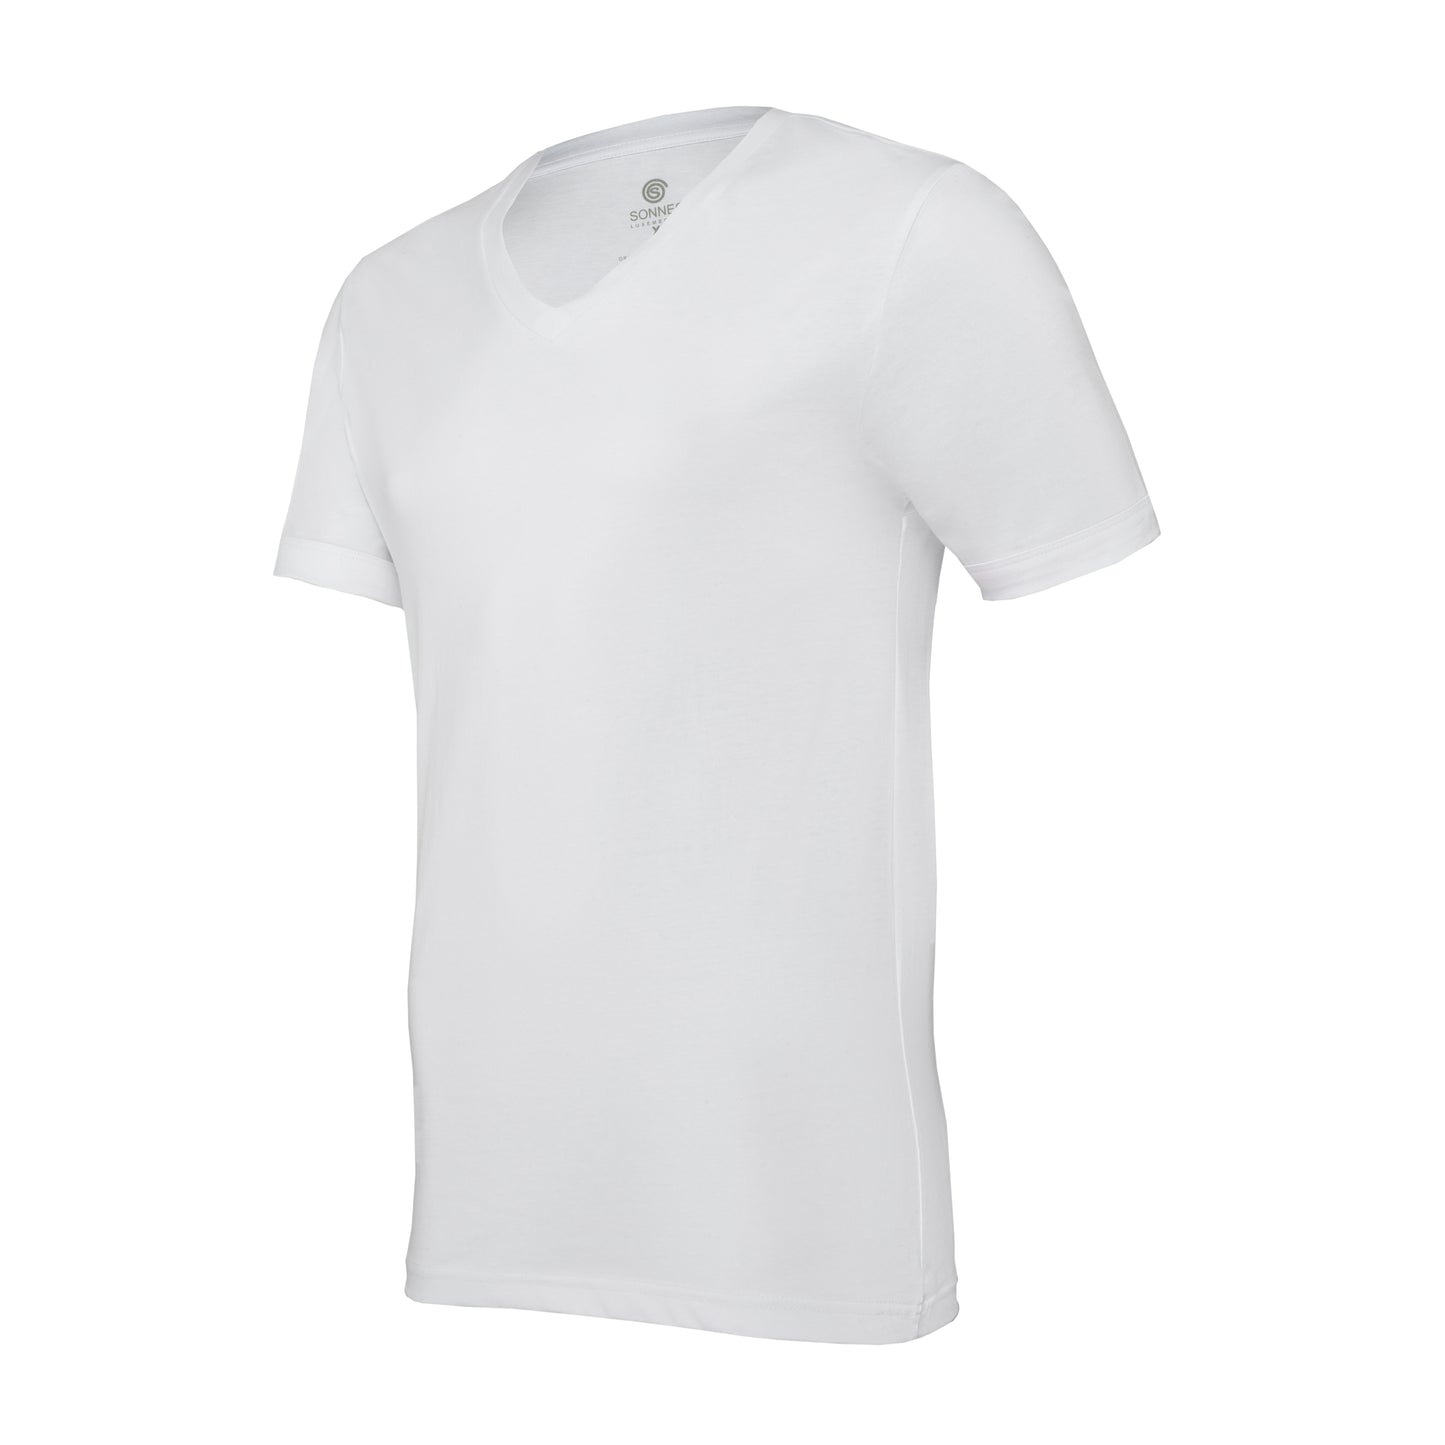 V-neck deep, white, bodyfit T-shirt – pack of 2 or 4 tees